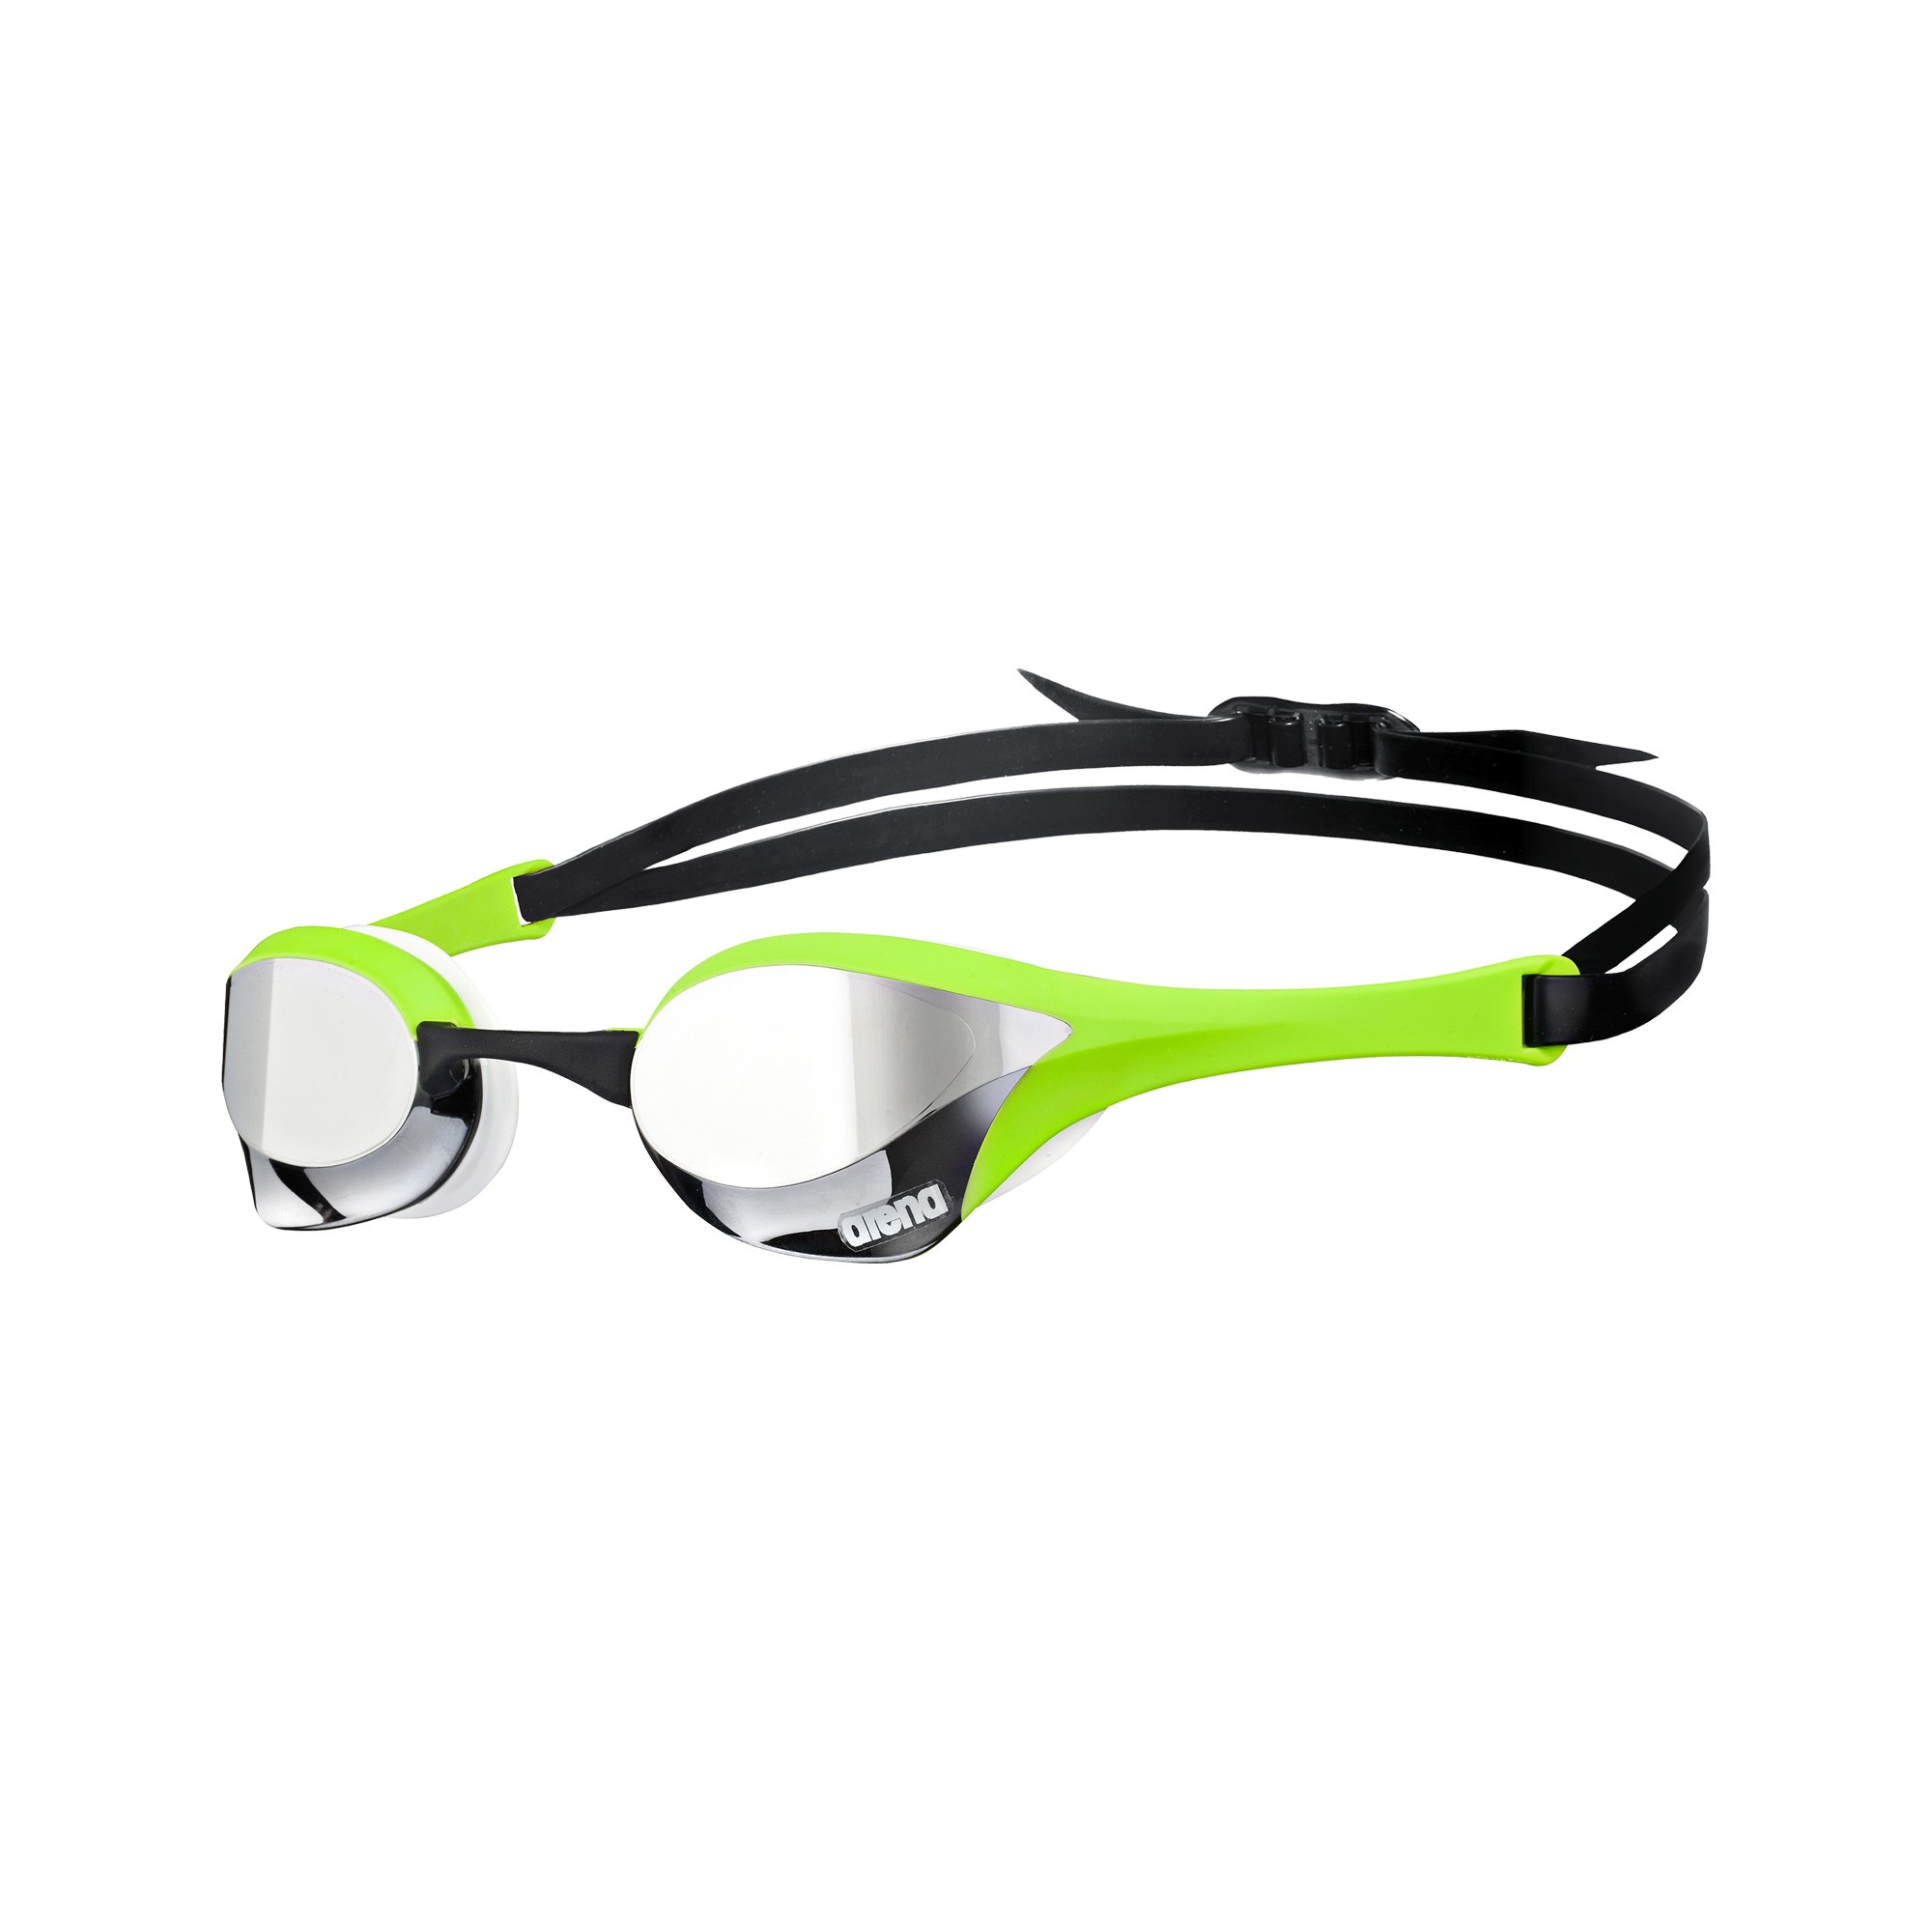 Gafas de natación para competición arena unisex Cobra Ultra Swipe